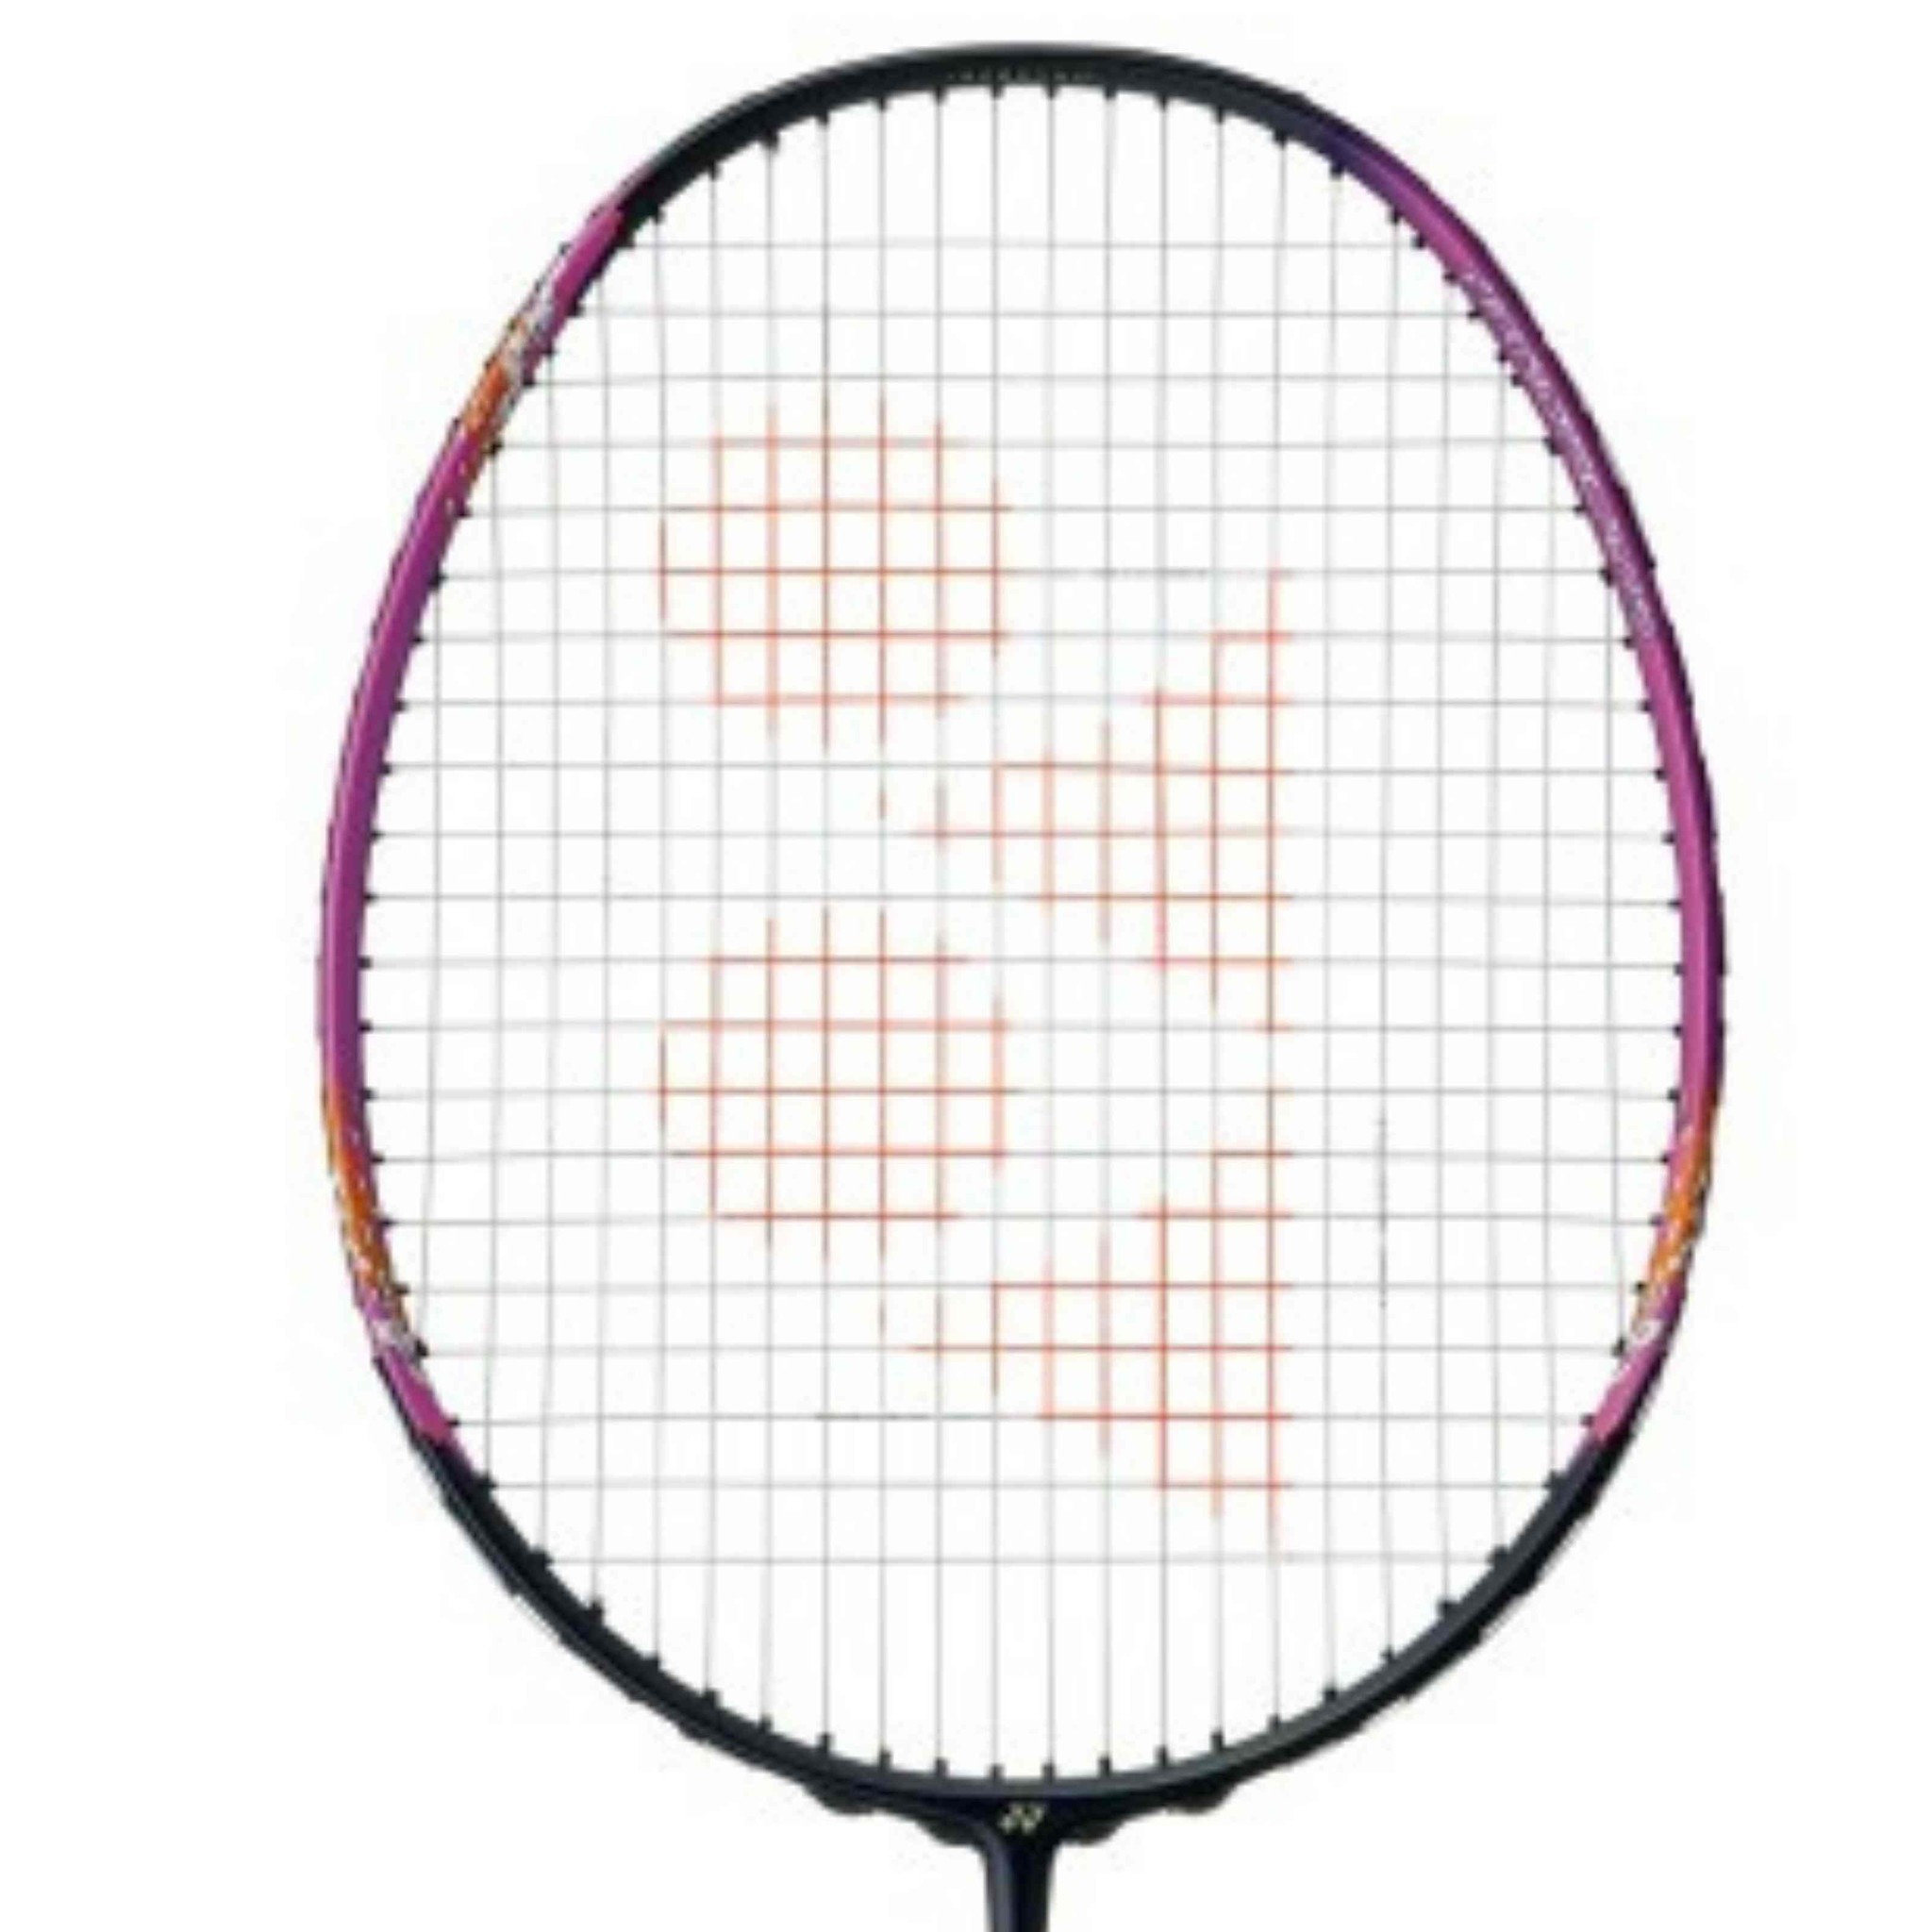 Yonex Nanoflare Speed Purple - KW racket speciaalzaak